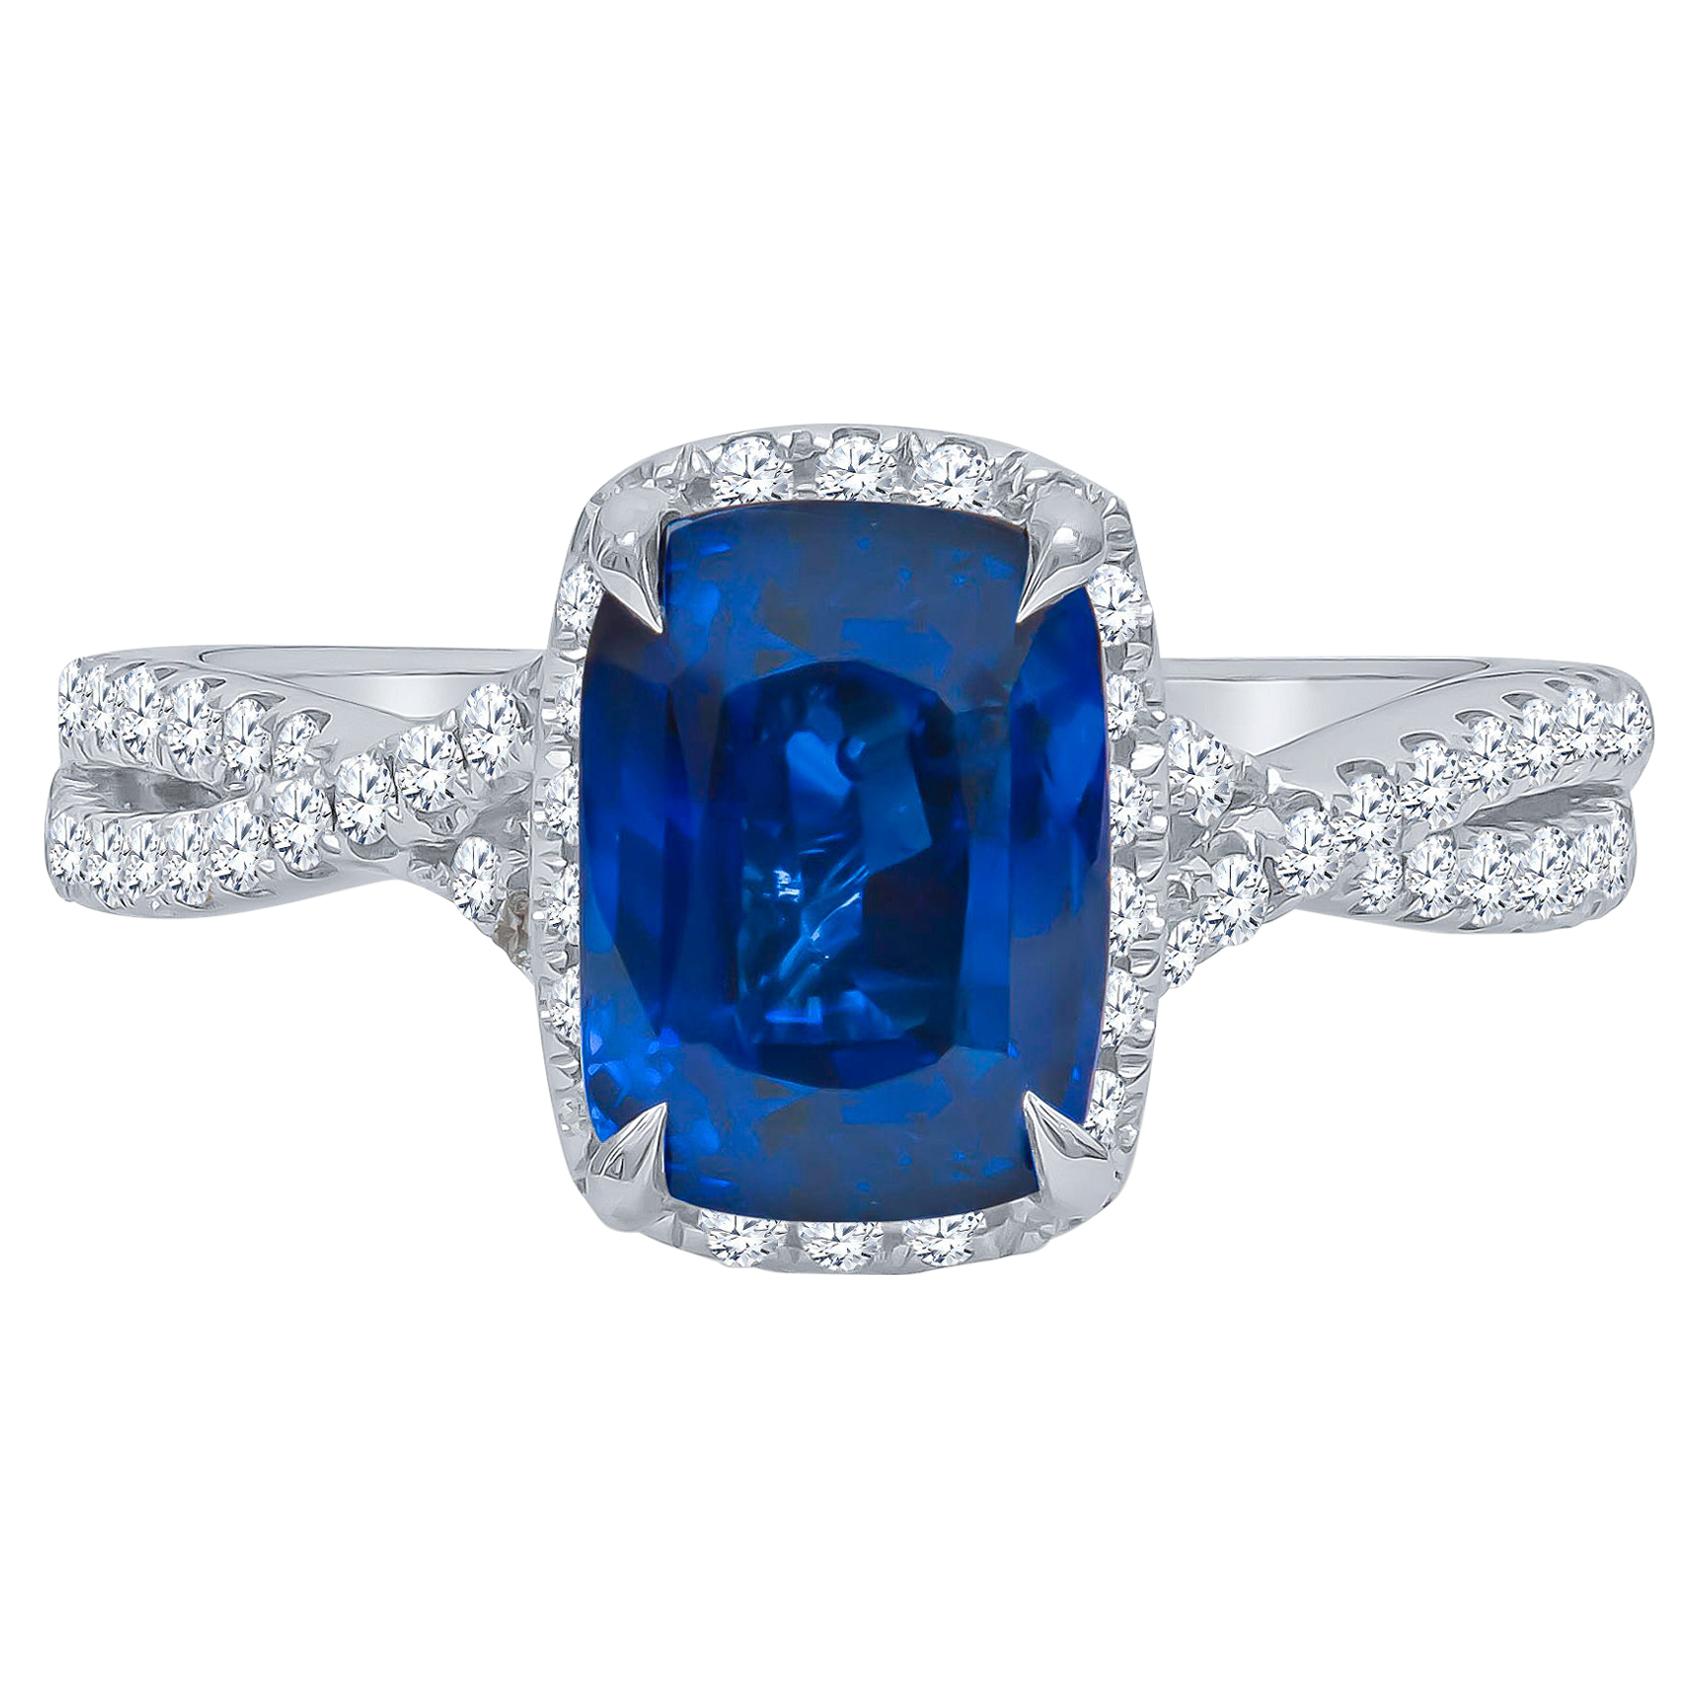 3.04 Carat Cushion Cut Natural Blue Sapphire Sri Lanka ‘GIA’ and Diamond Ring